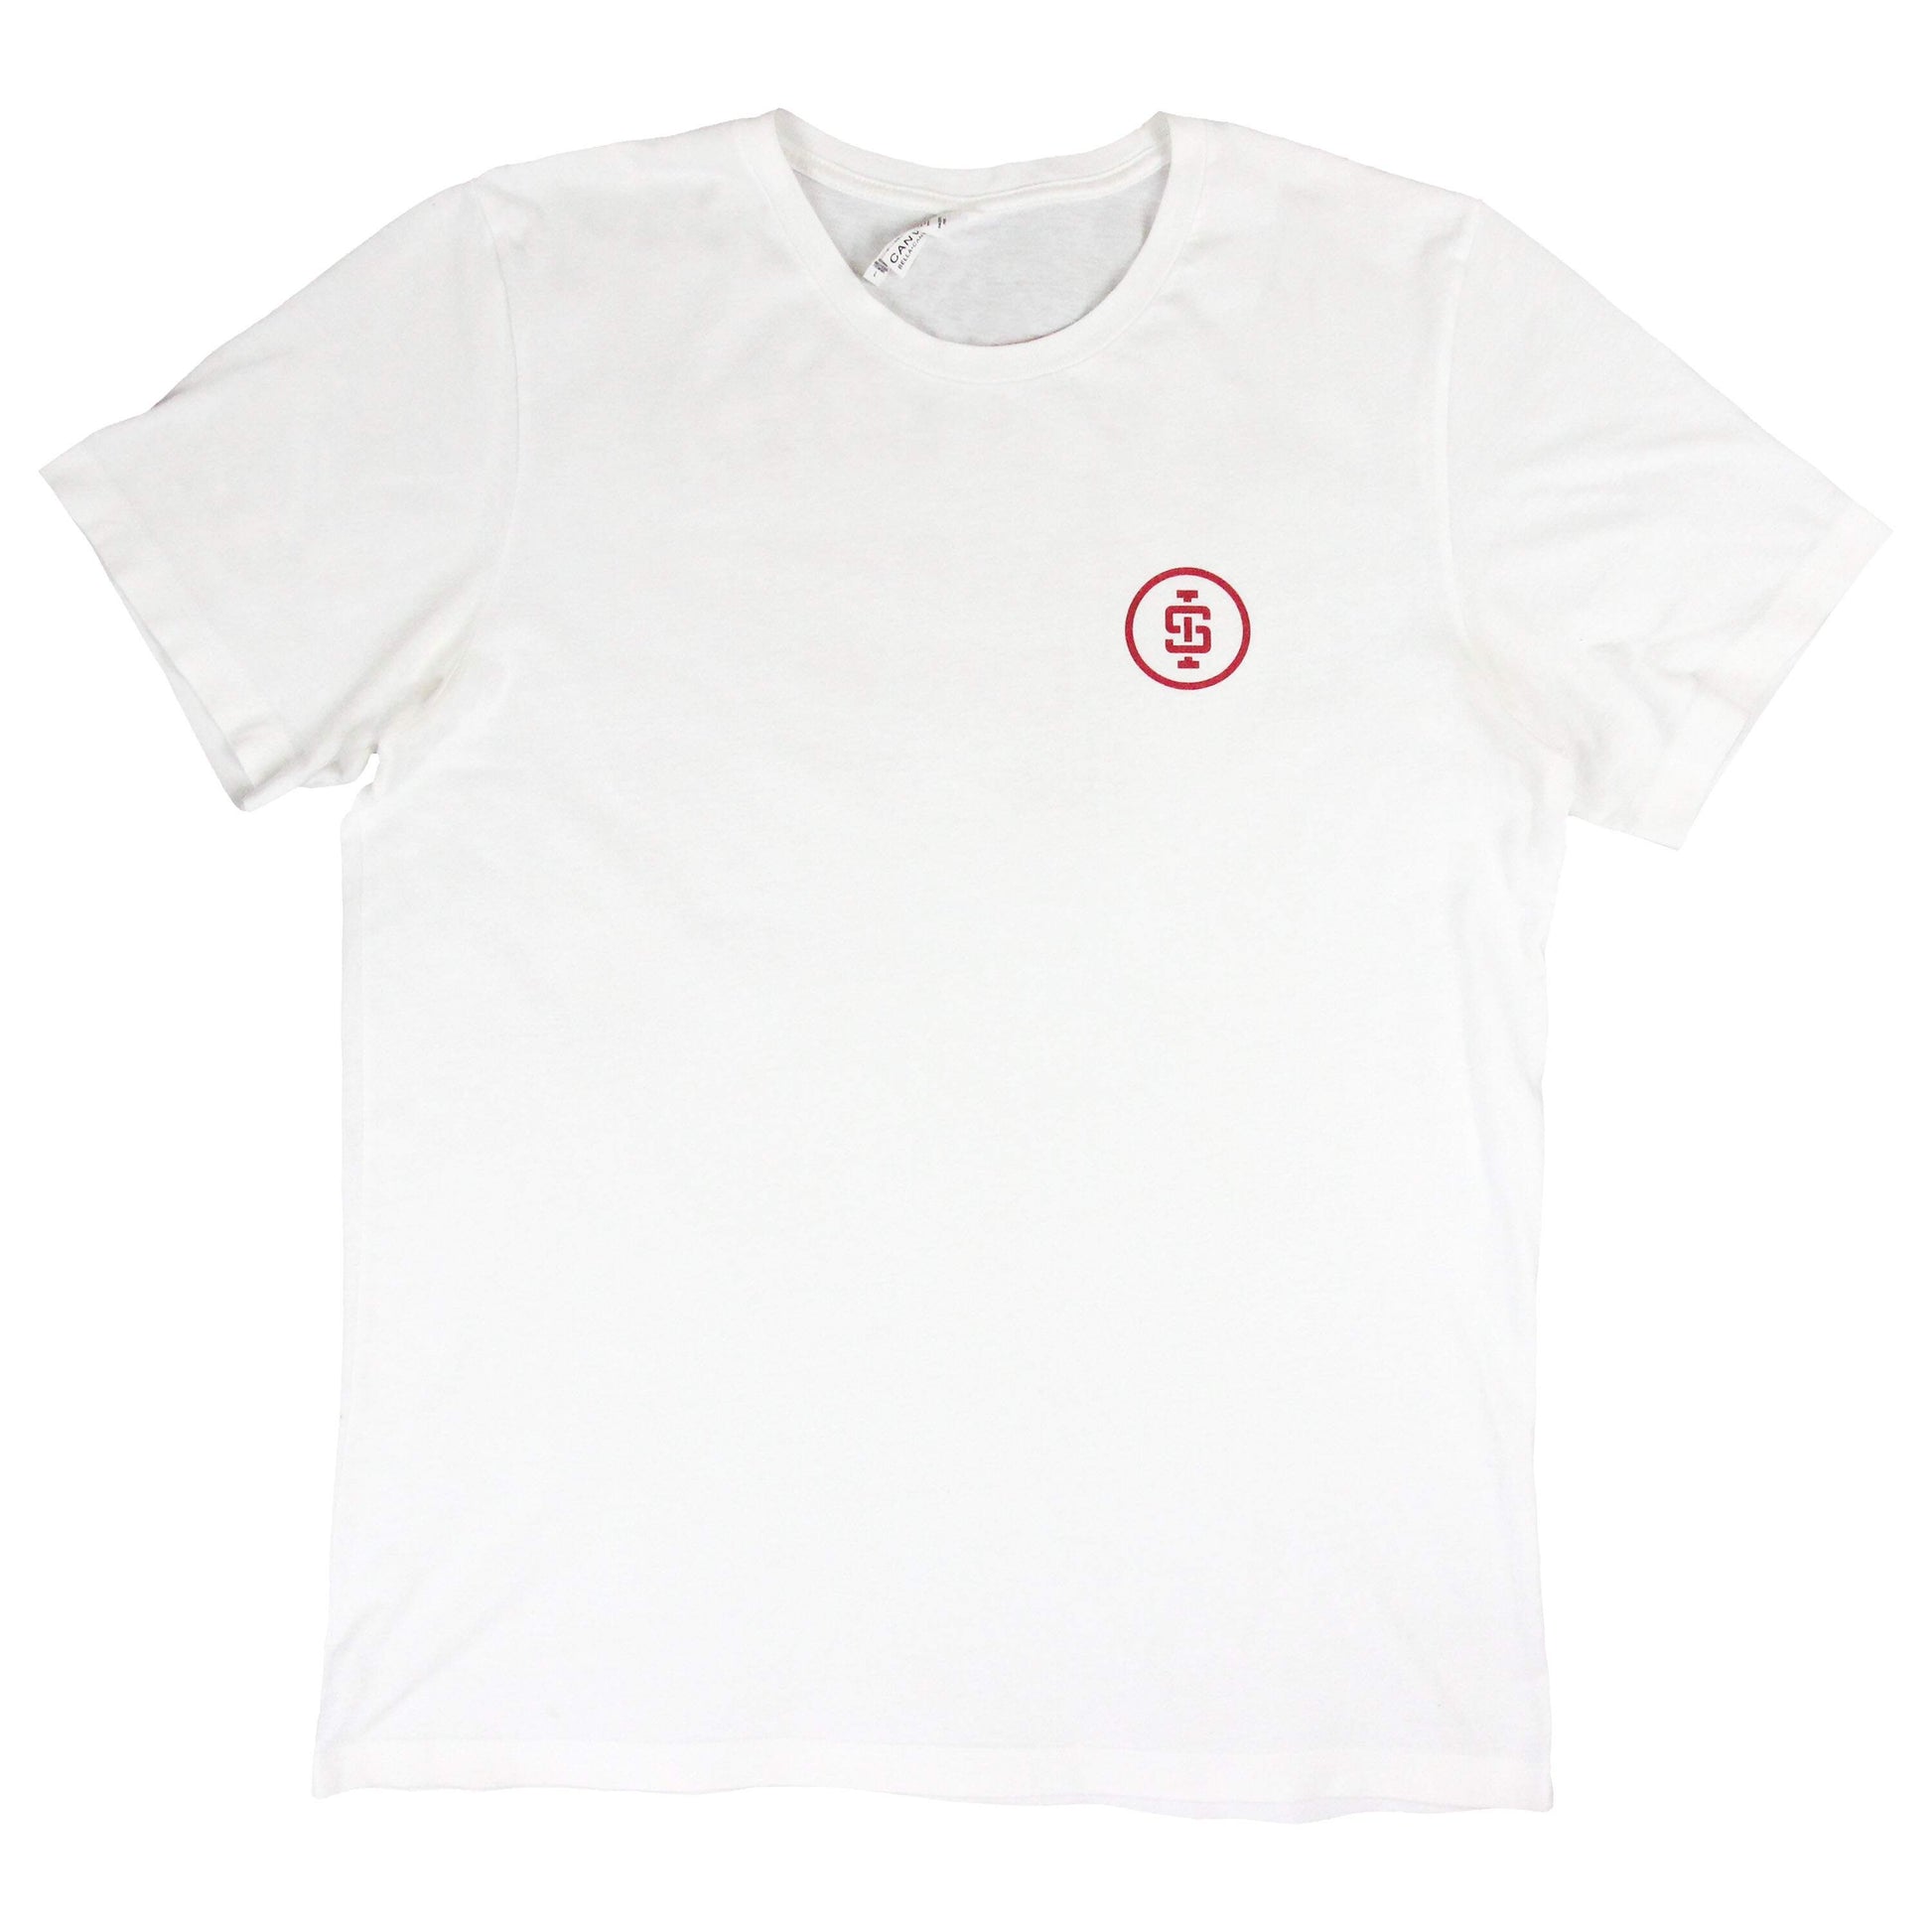 'Original Crew' white powerlifting shirt | Iron Strong Apparel